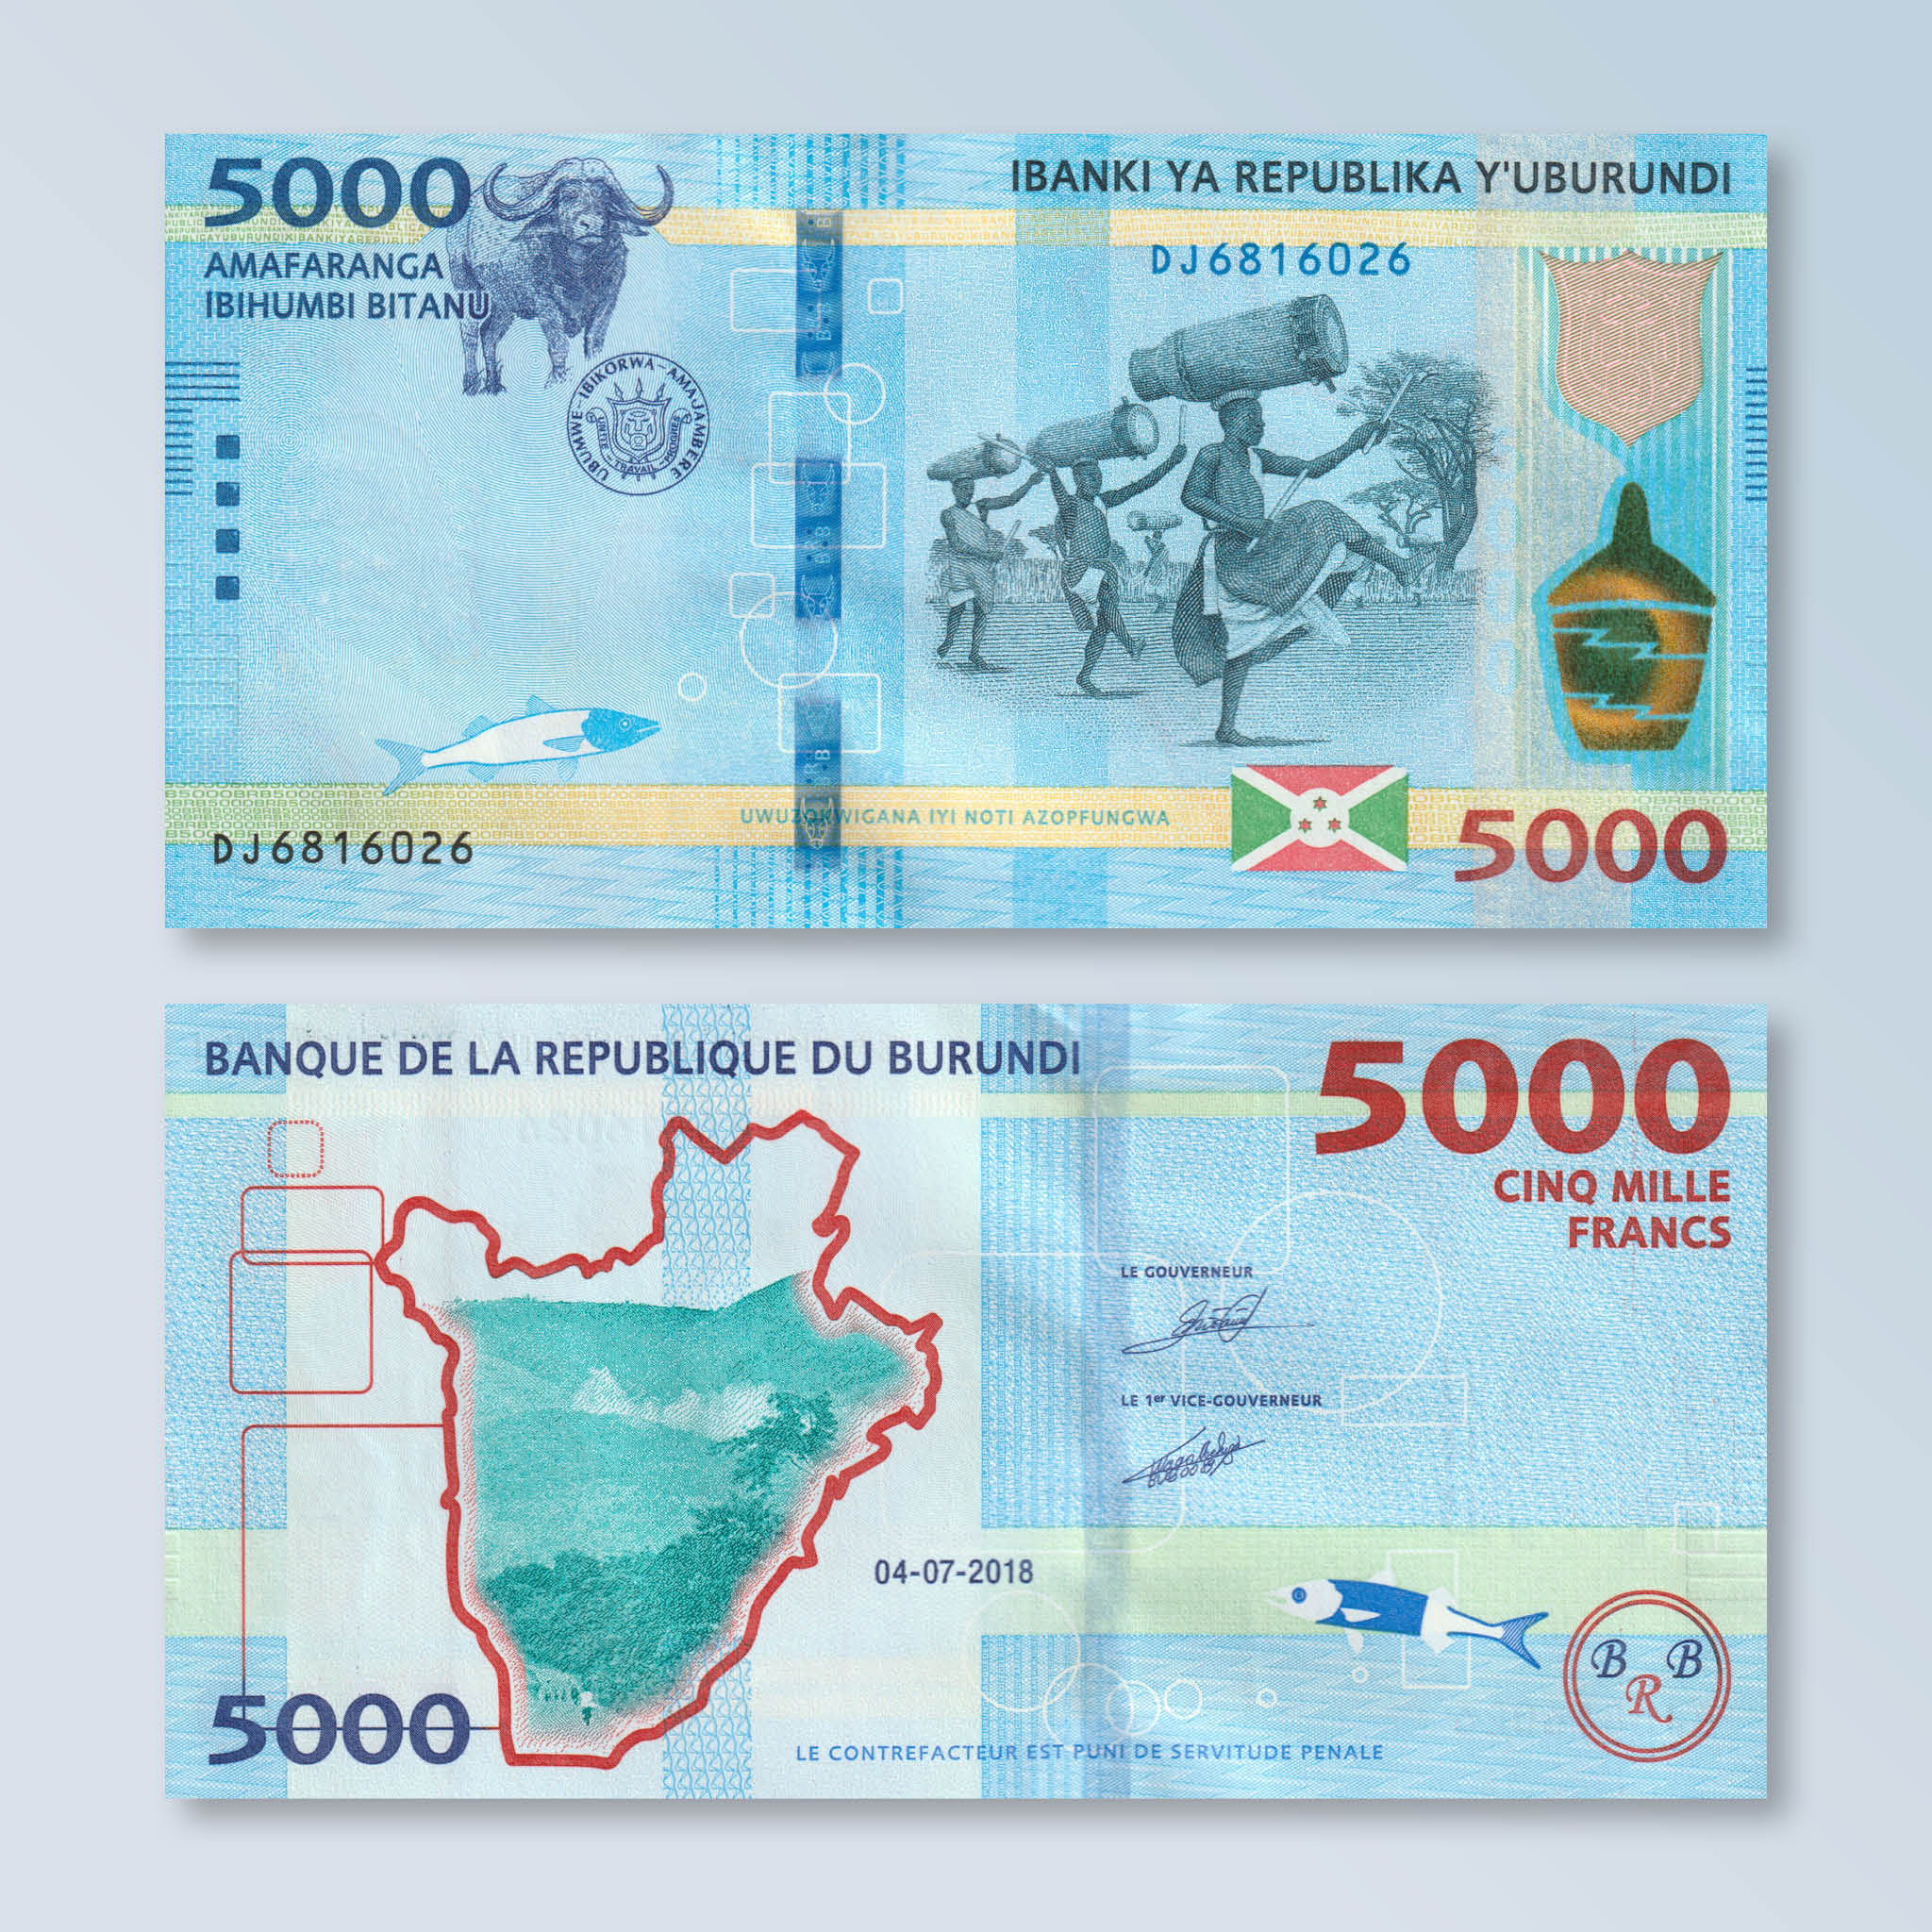 Burundi 5000 Francs, 2018, B239b, P53, UNC - Robert's World Money - World Banknotes